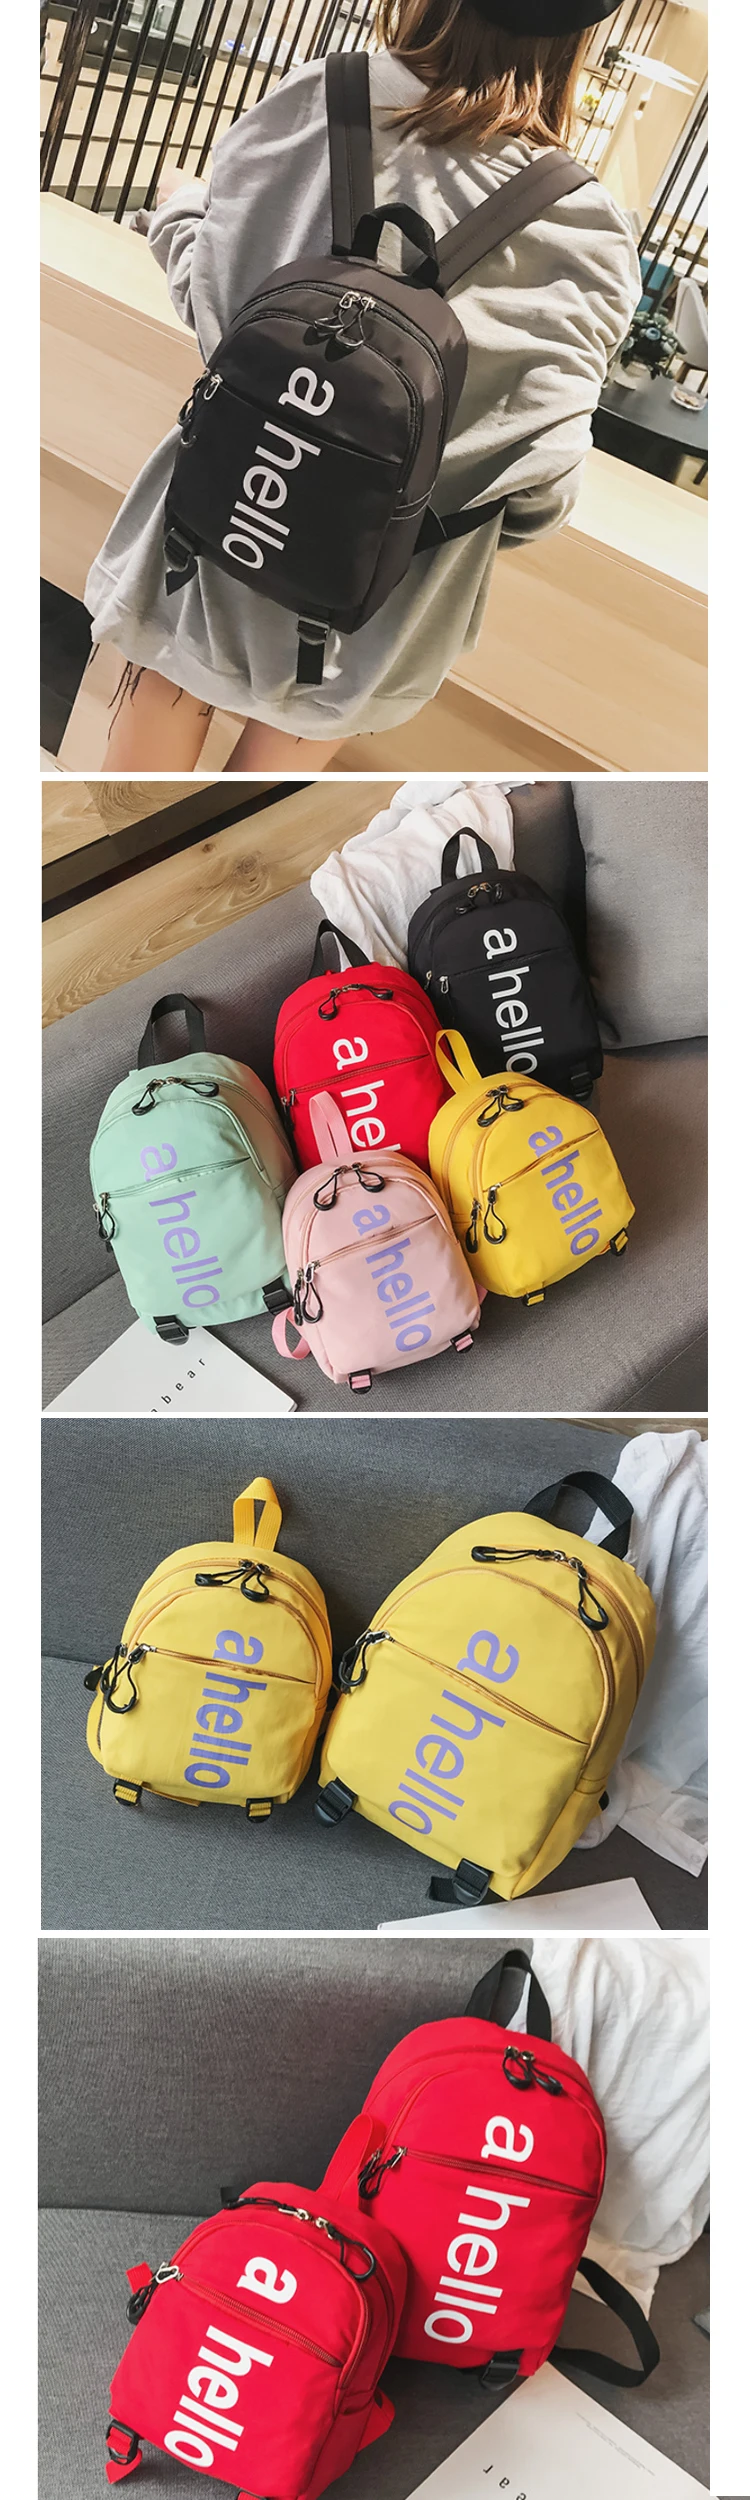 Osgoodway2 New Arrival Korean Style Cute Kids Wholesale Girl Backpacks for School Children